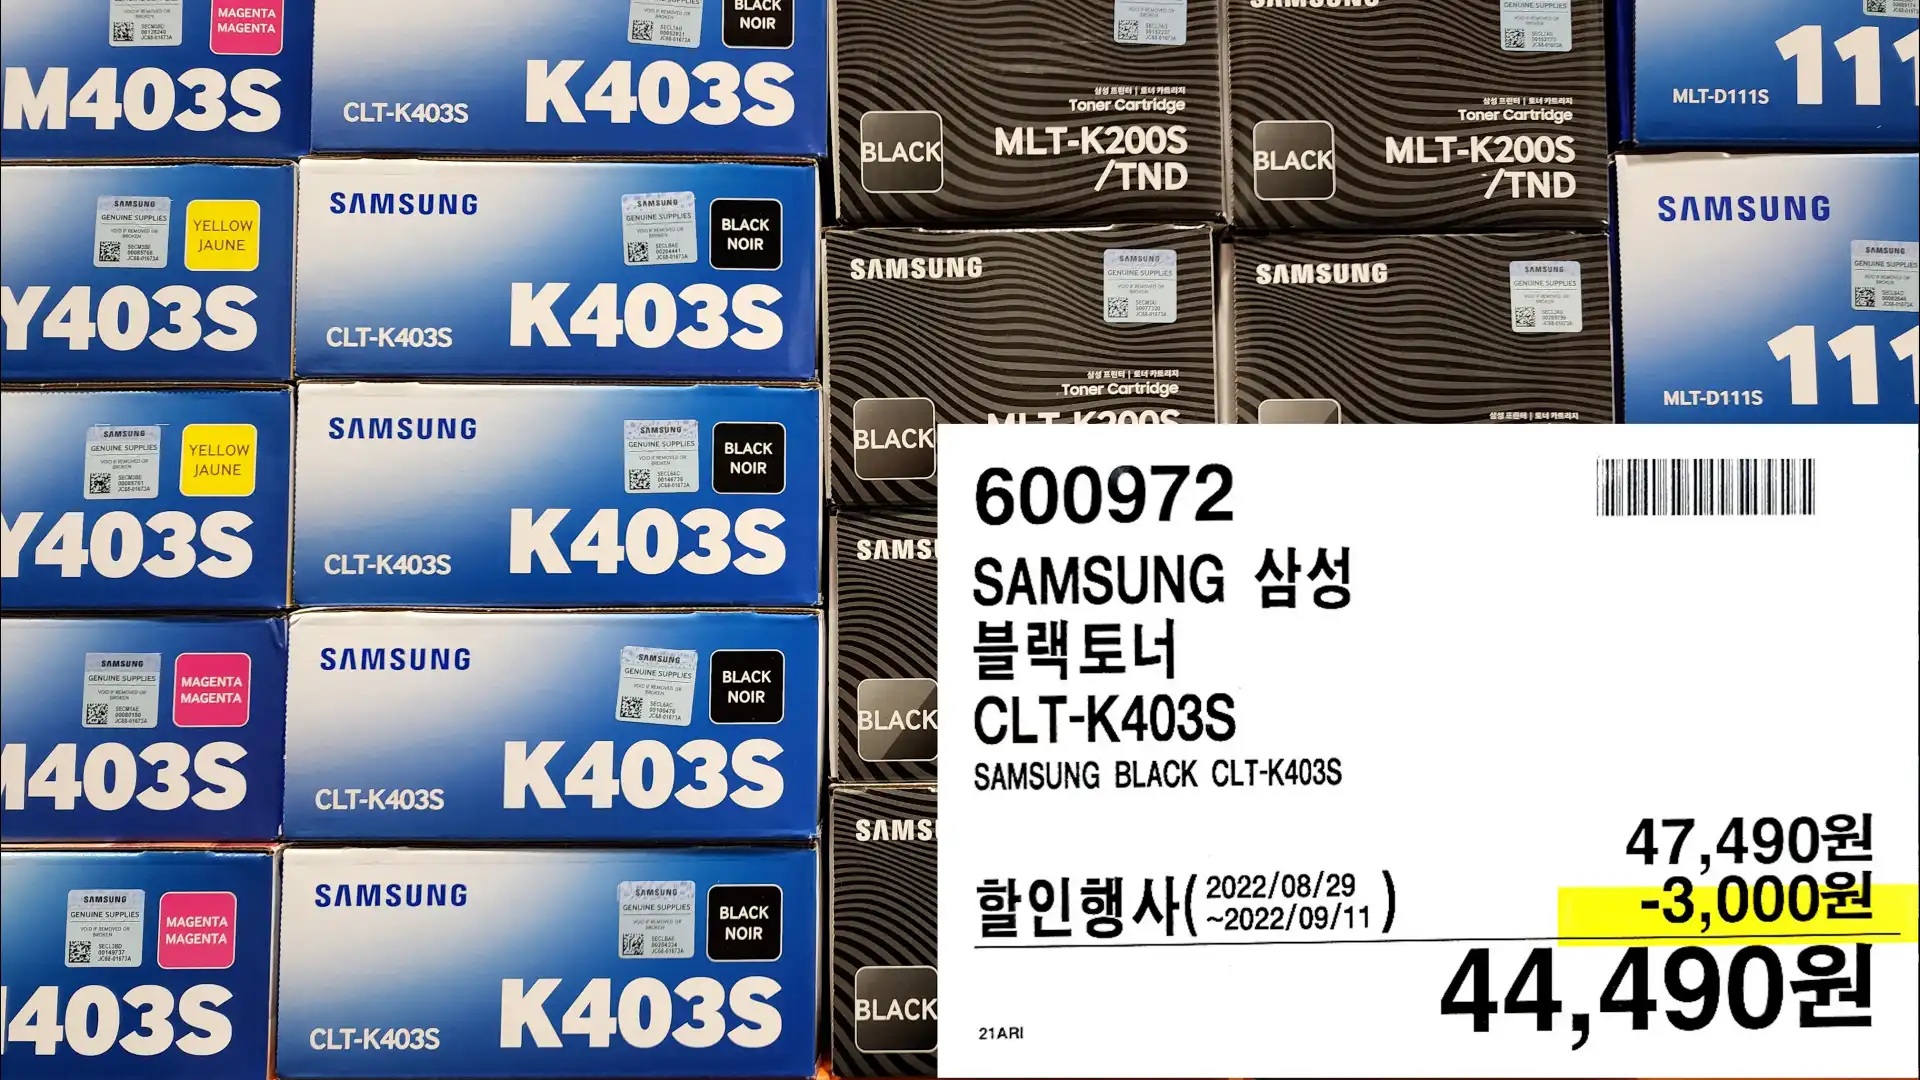 SAMSUNG 삼성
블랙토너
CLT-K403S
SAMSUNG BLACK CLT-K403S
44,490원